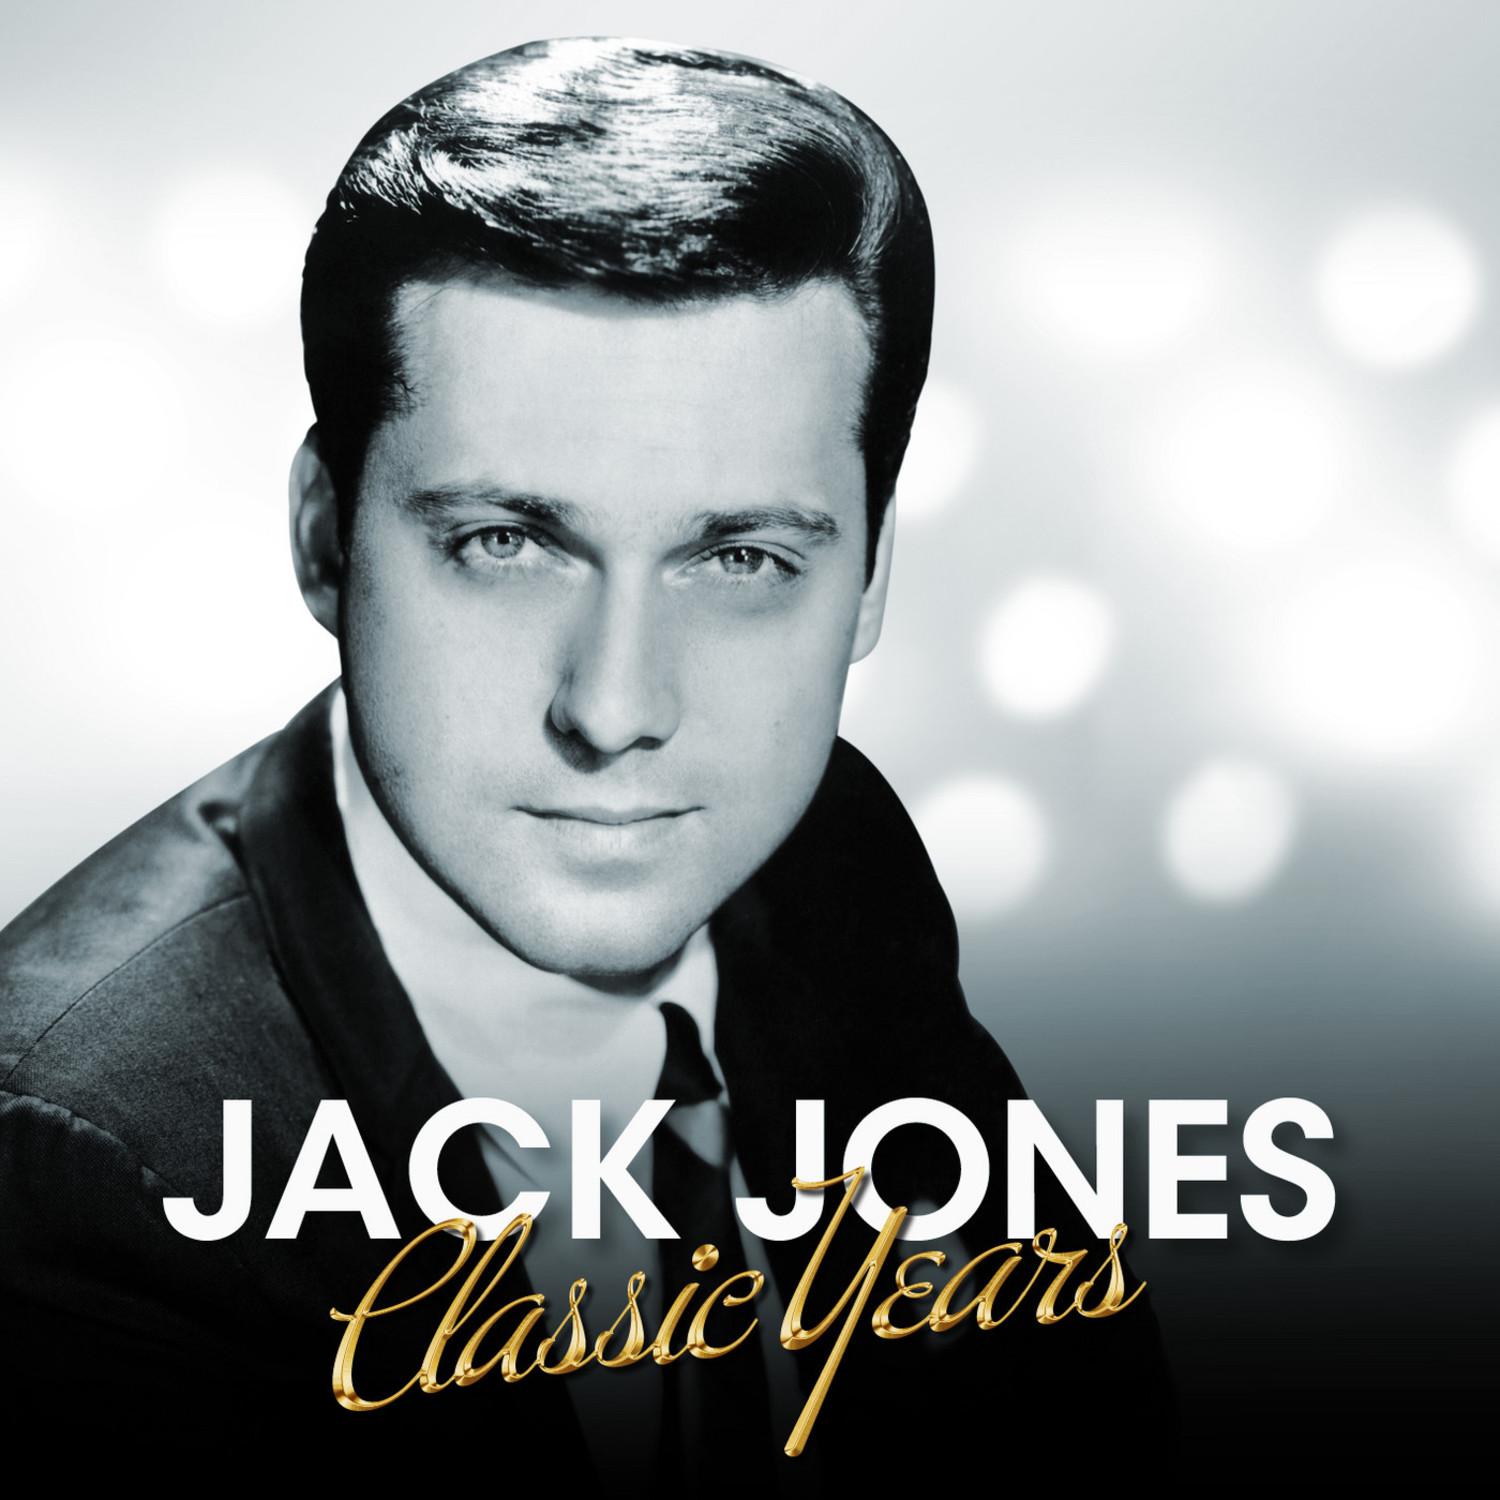 Jack Jones - Classic Years